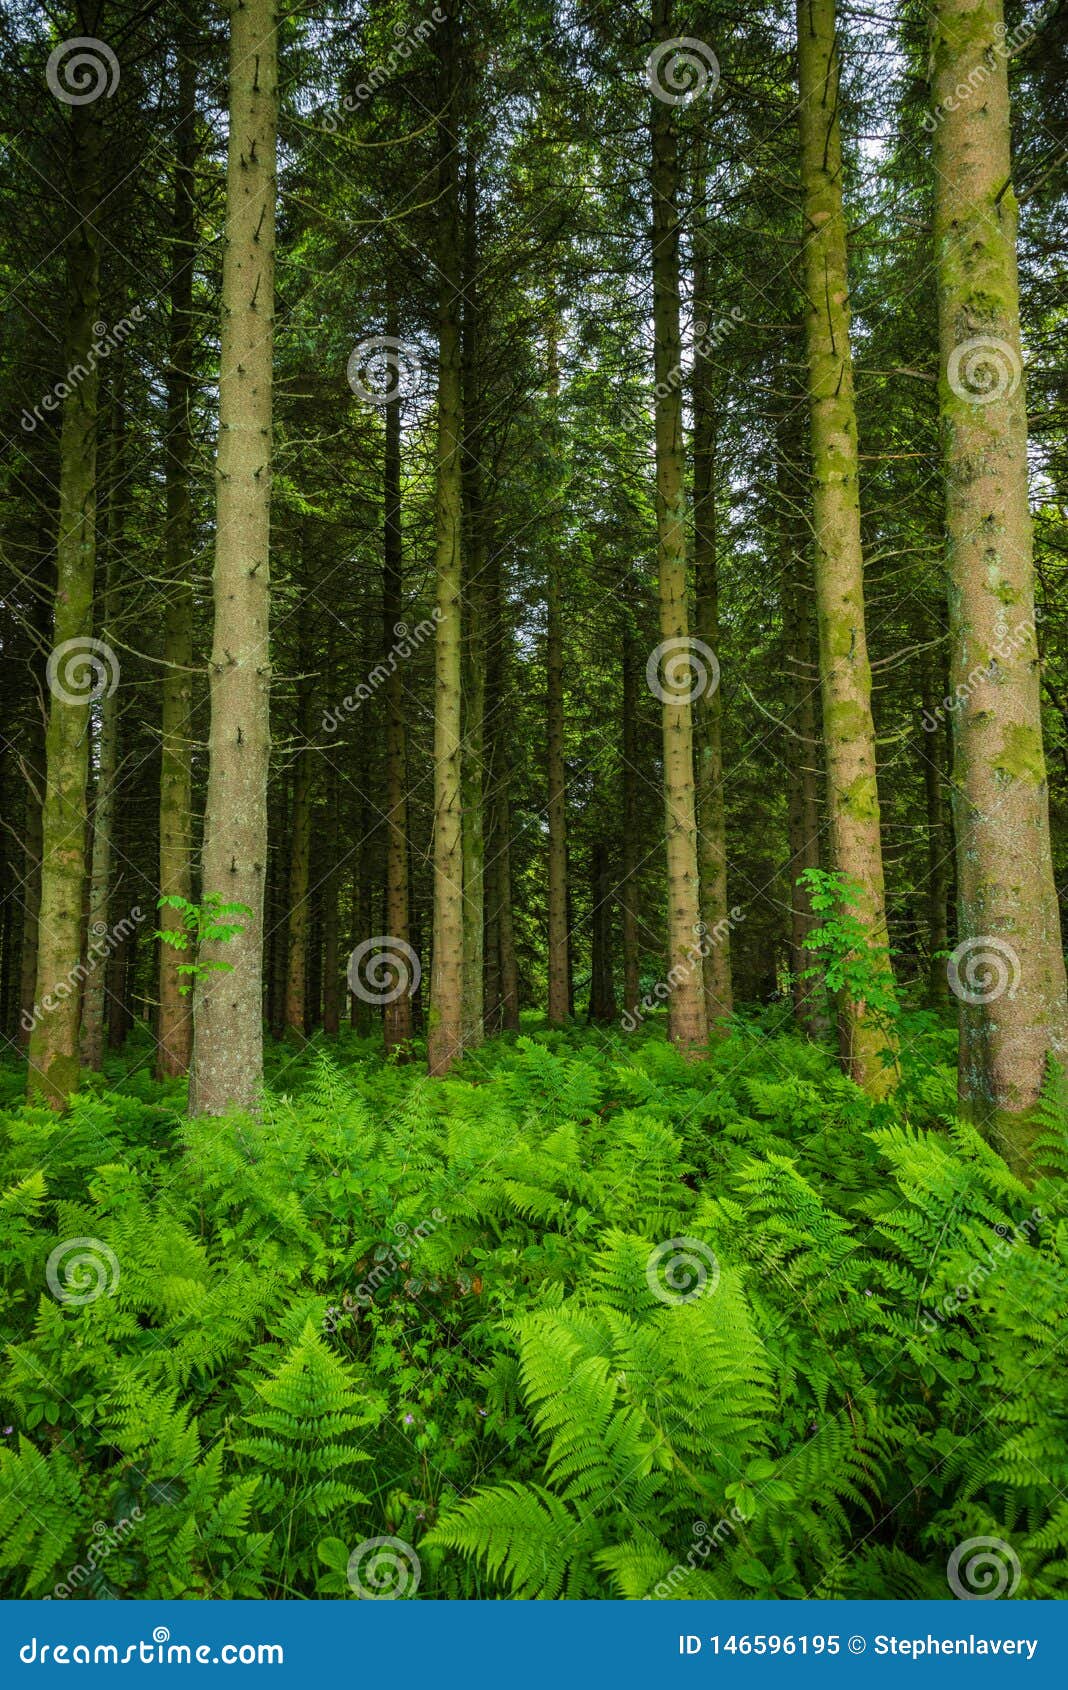 a carpet of hard ferns blechnum spicant cover the forest floor of woodburn forest; carrickfergus